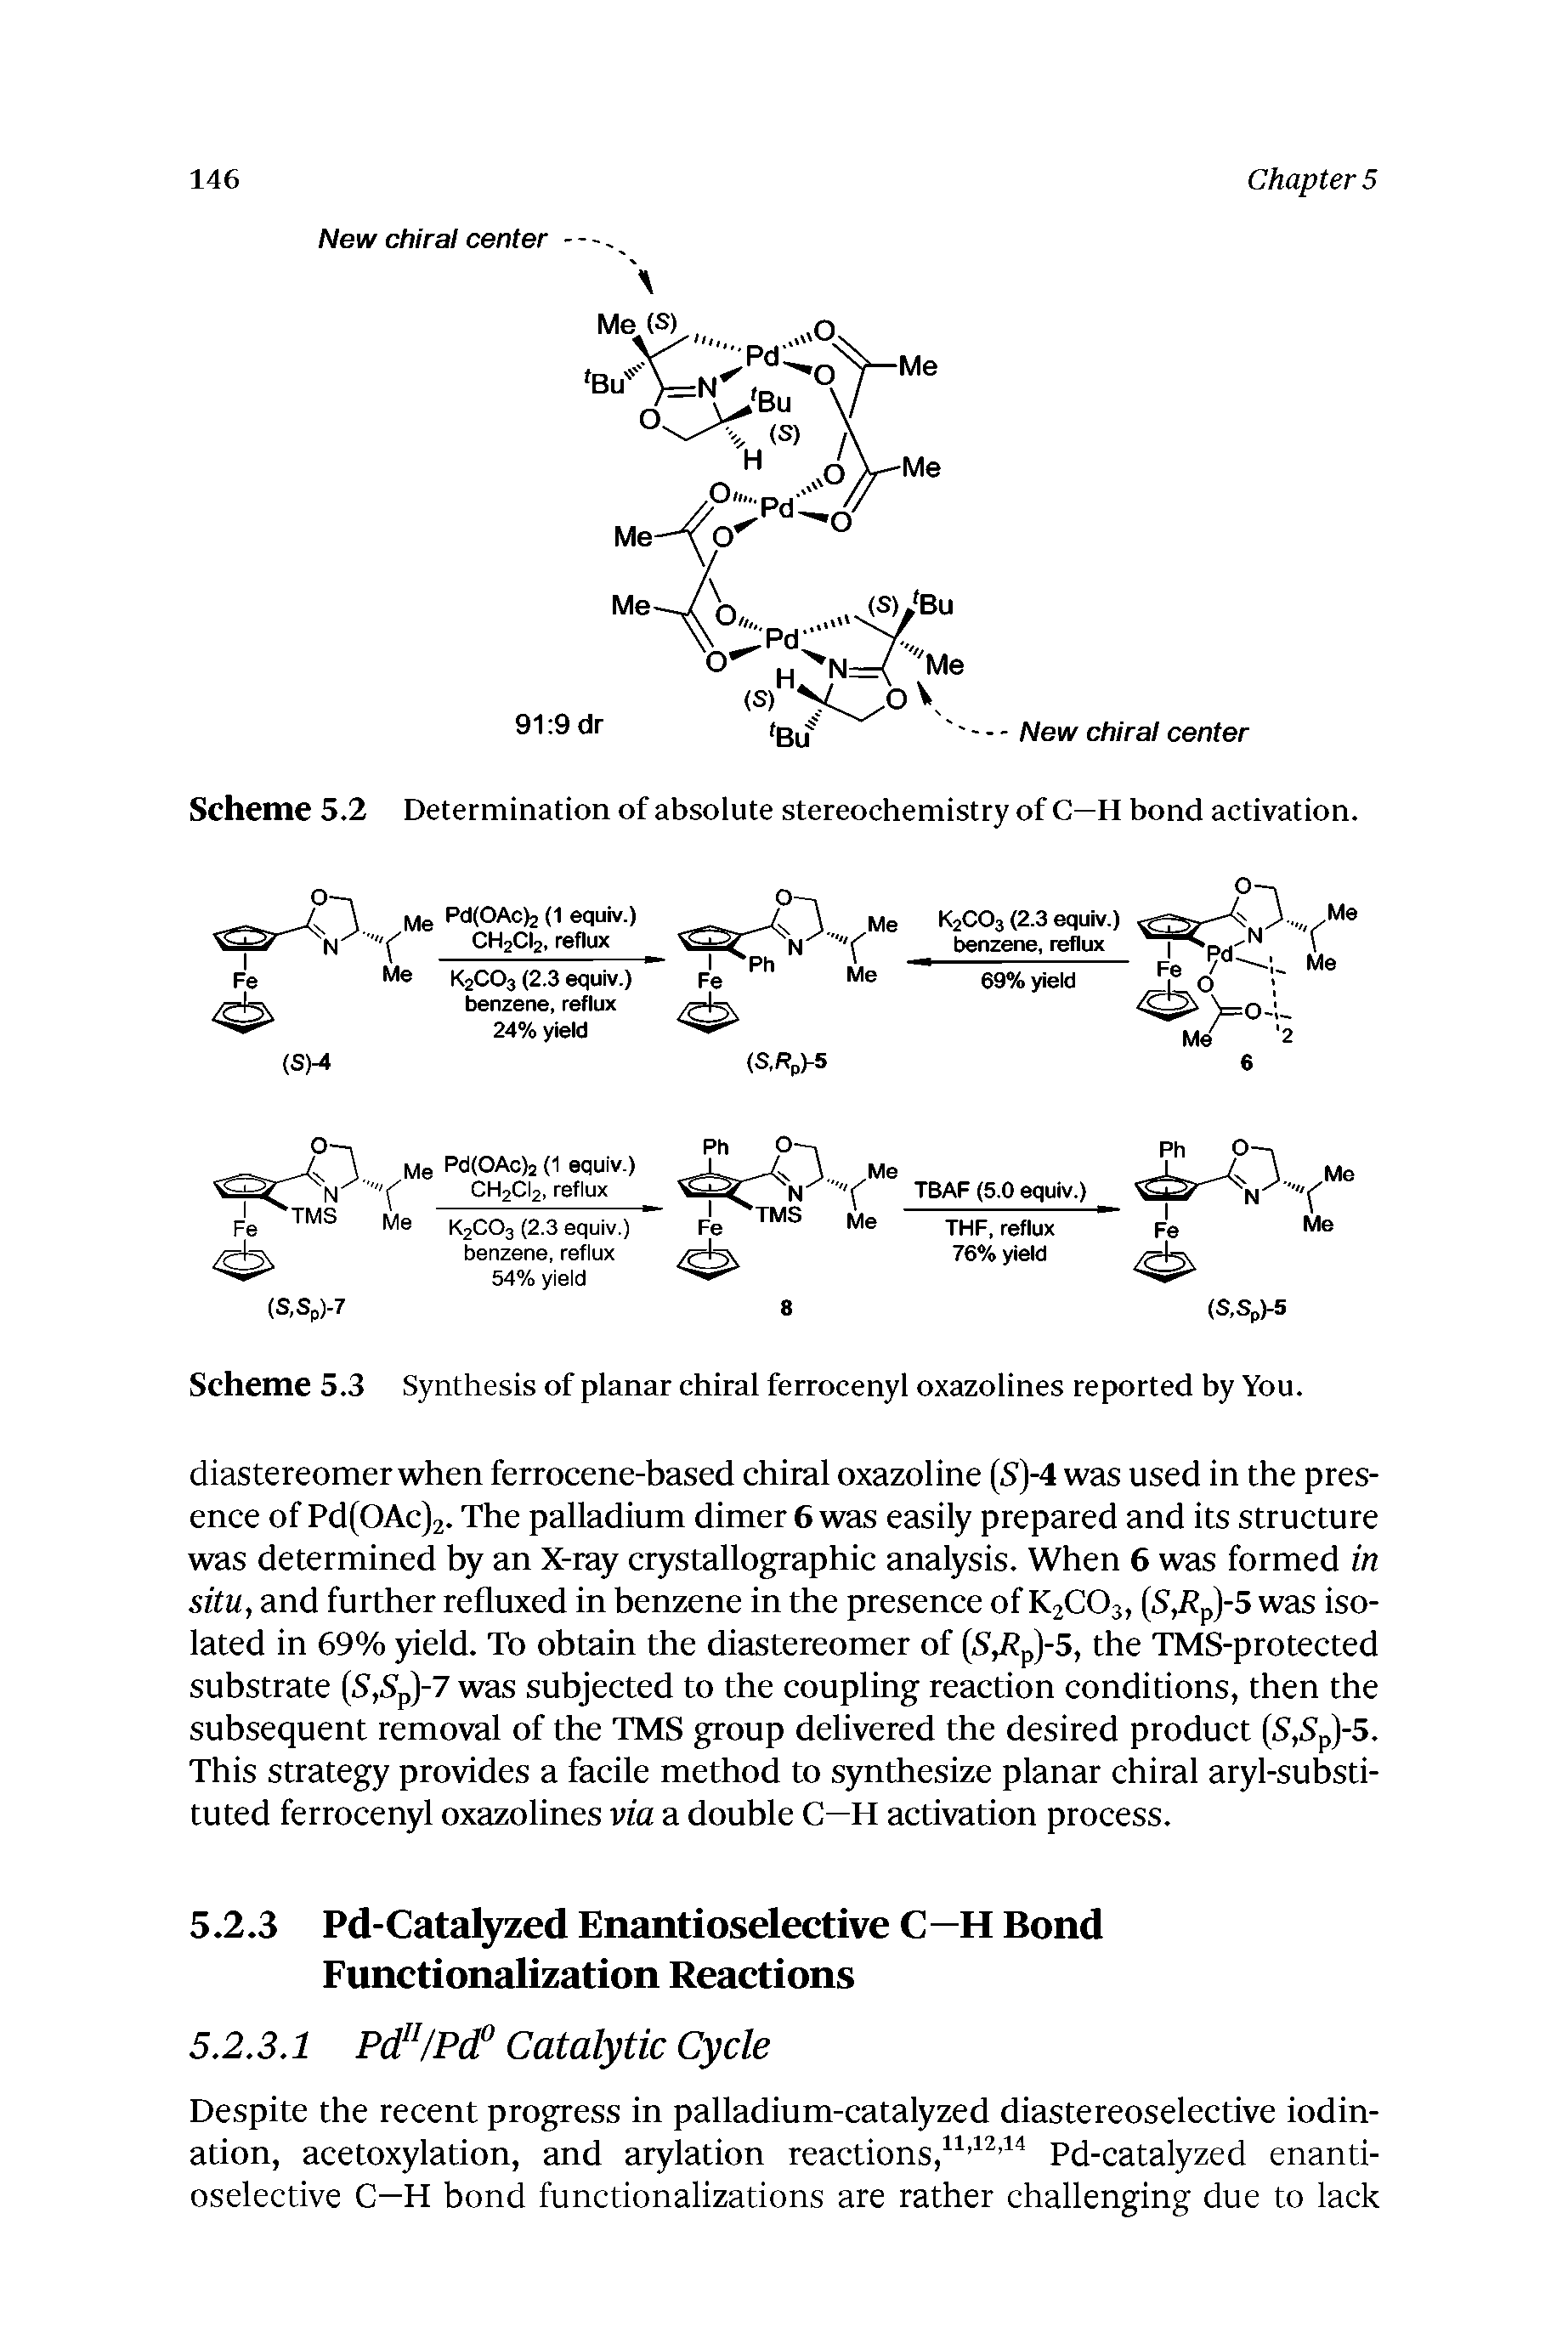 Scheme 5.2 Determination of absolute stereochemistry of C-H bond activation.